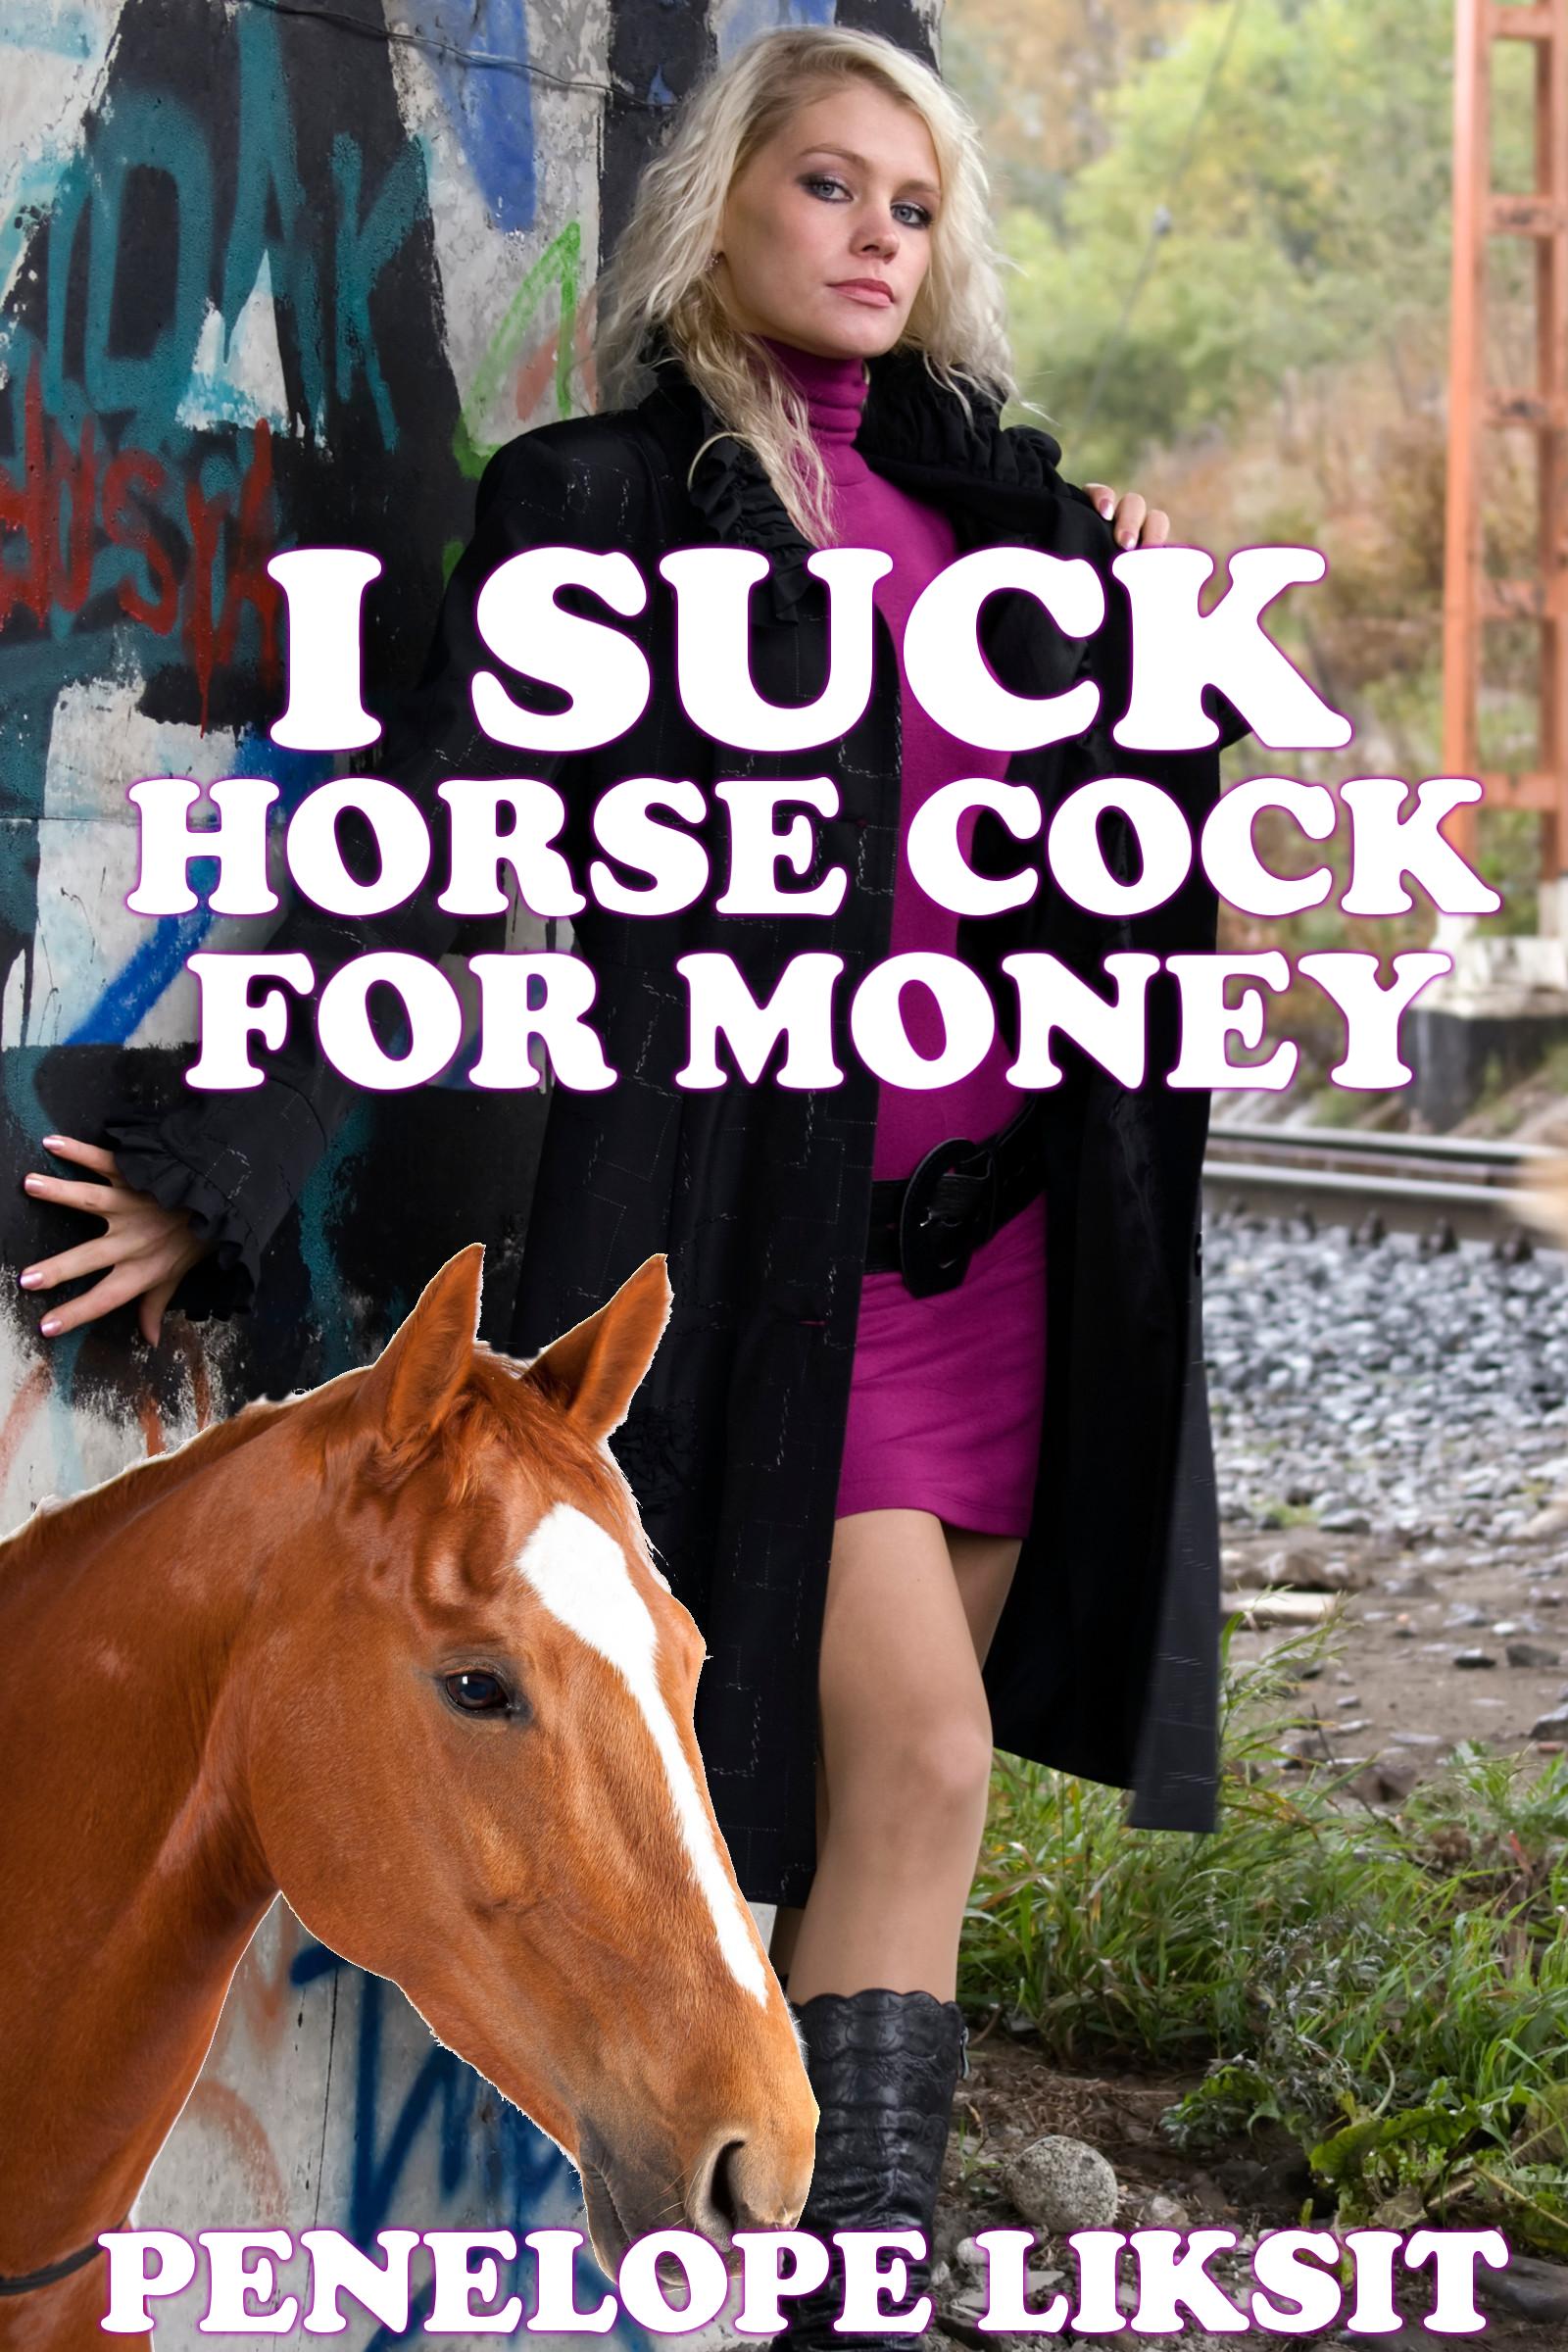 Sucking horse cock